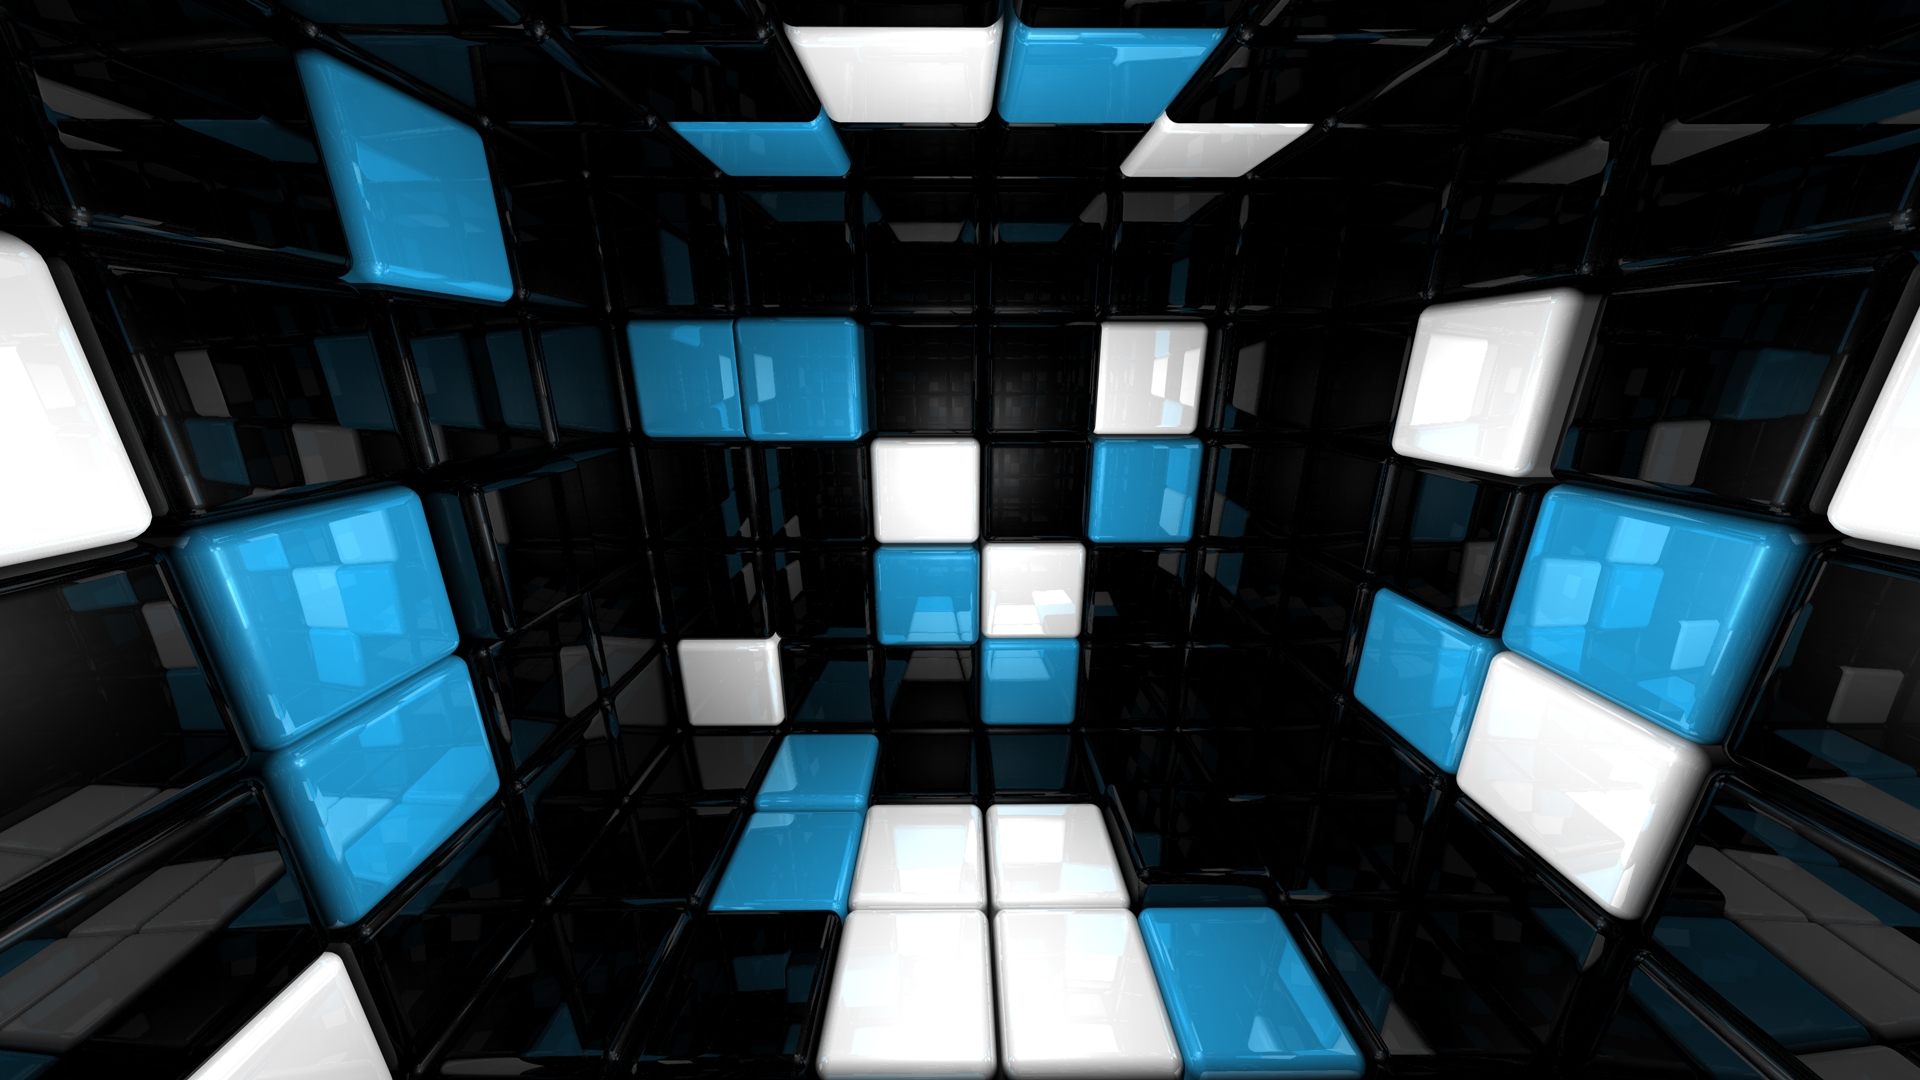 cube room 3D HD 1920 x 1080 by h1s0ka on DeviantArt